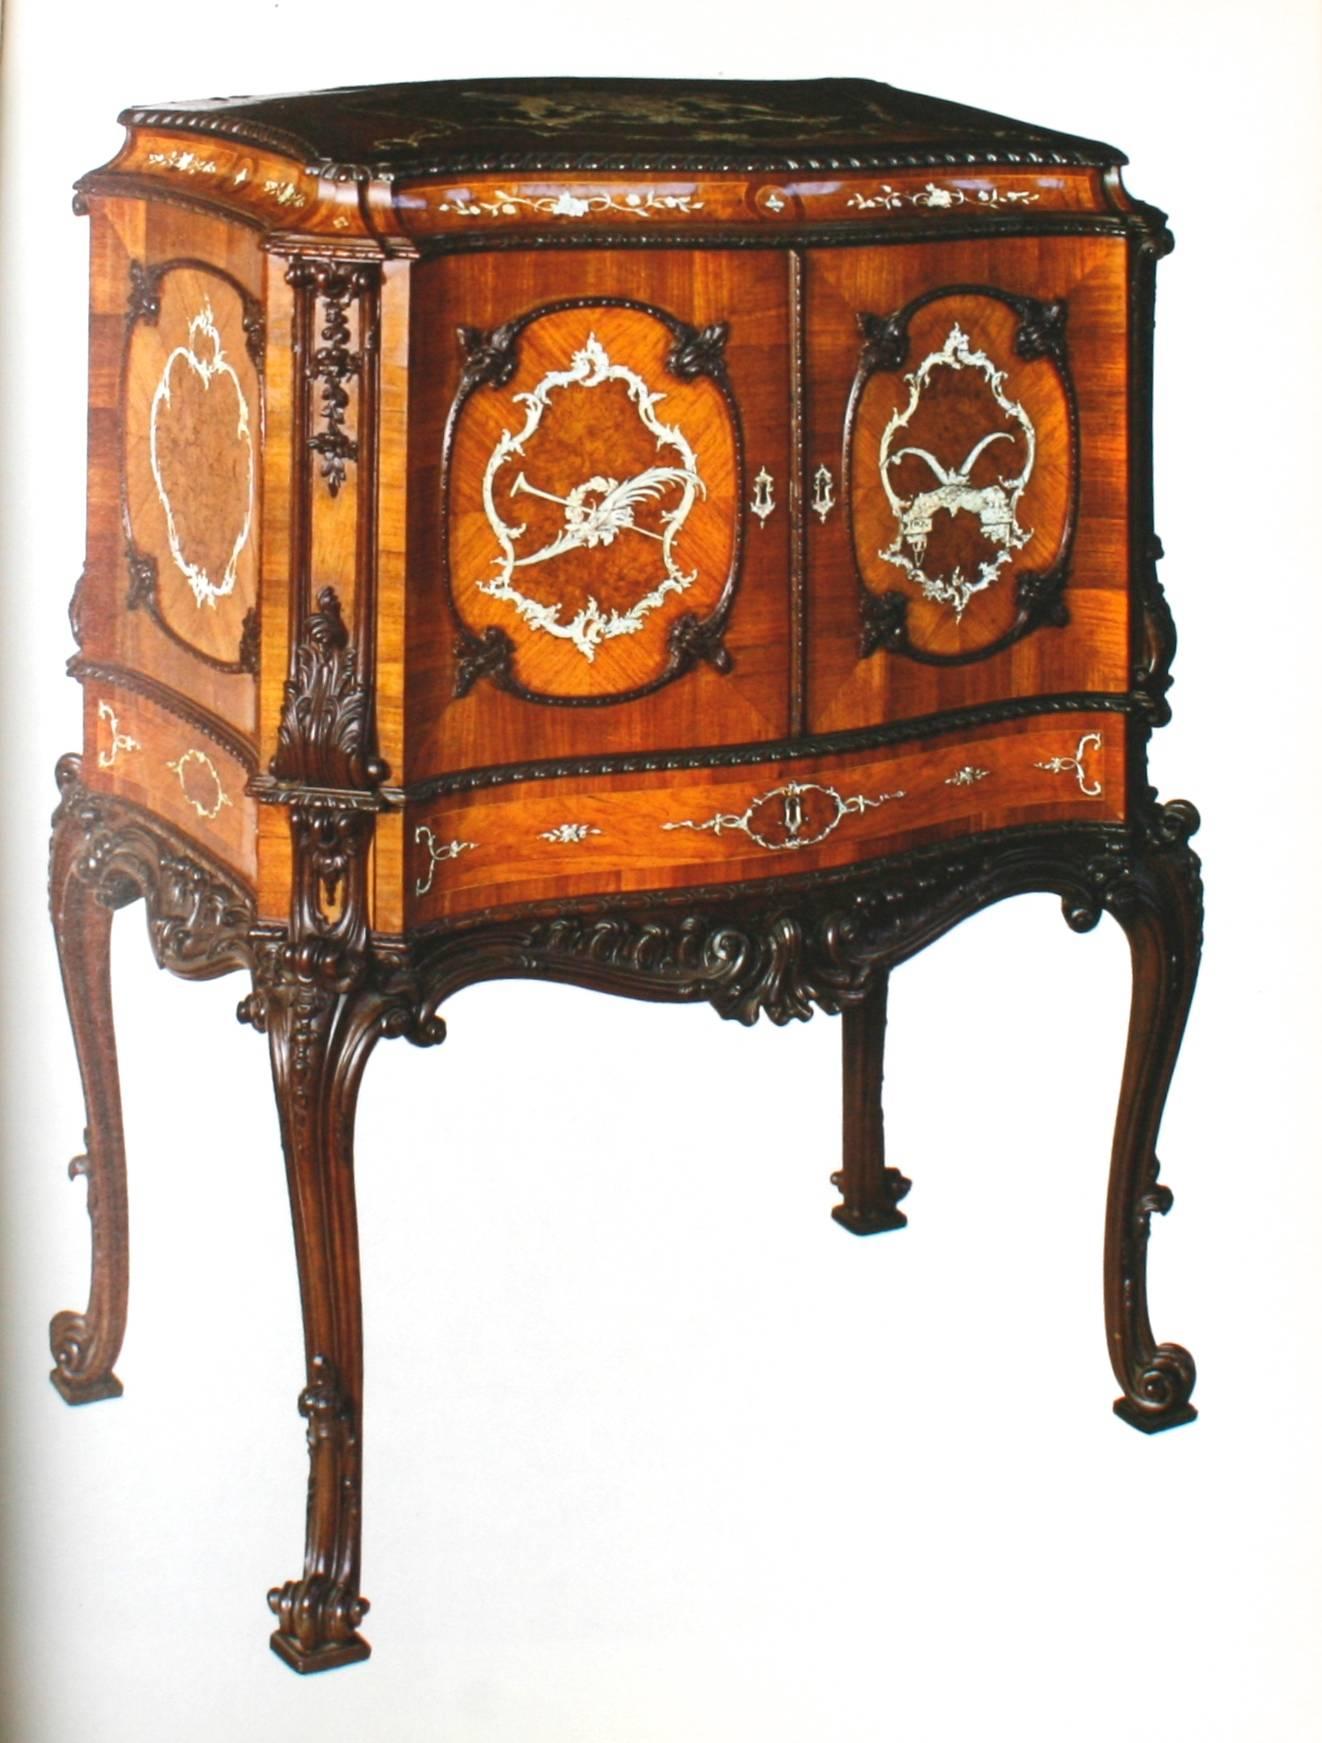 18th century cabinet maker and furniture designer